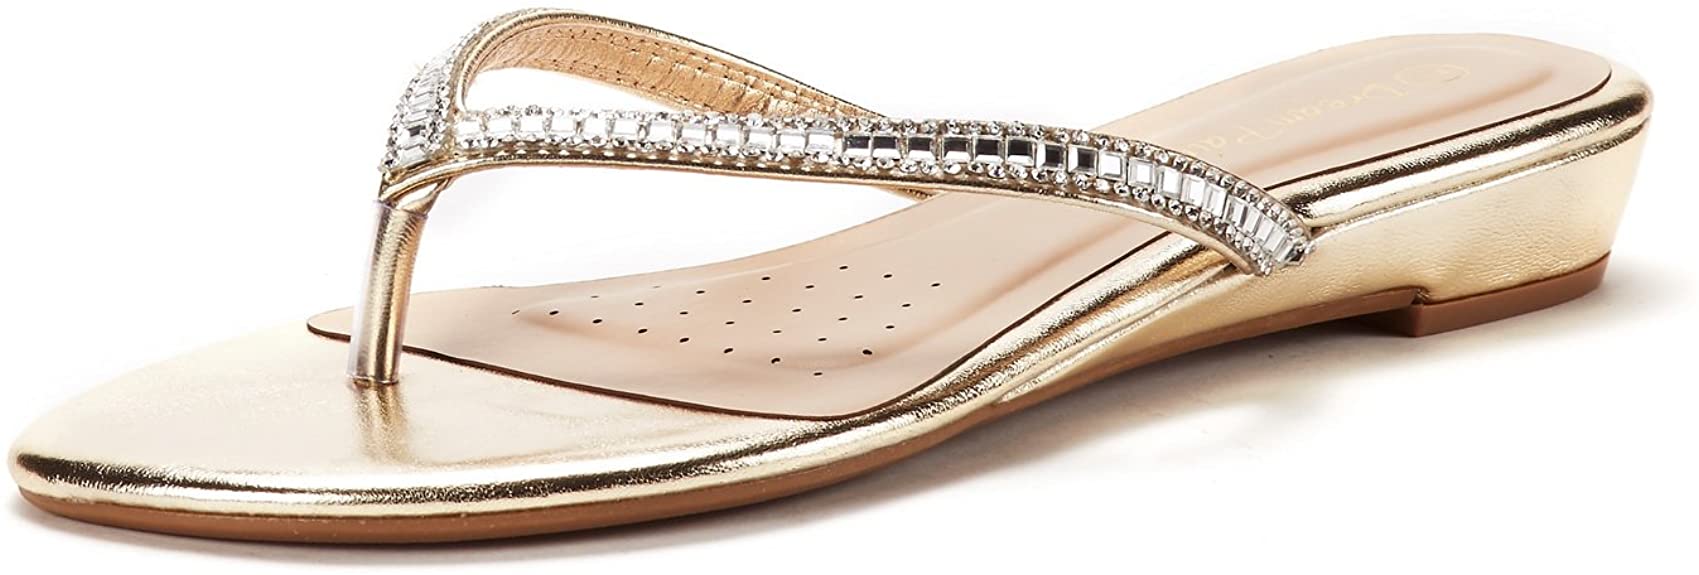 DREAM PAIRS Women's Jewel Flip-Flop Sandals